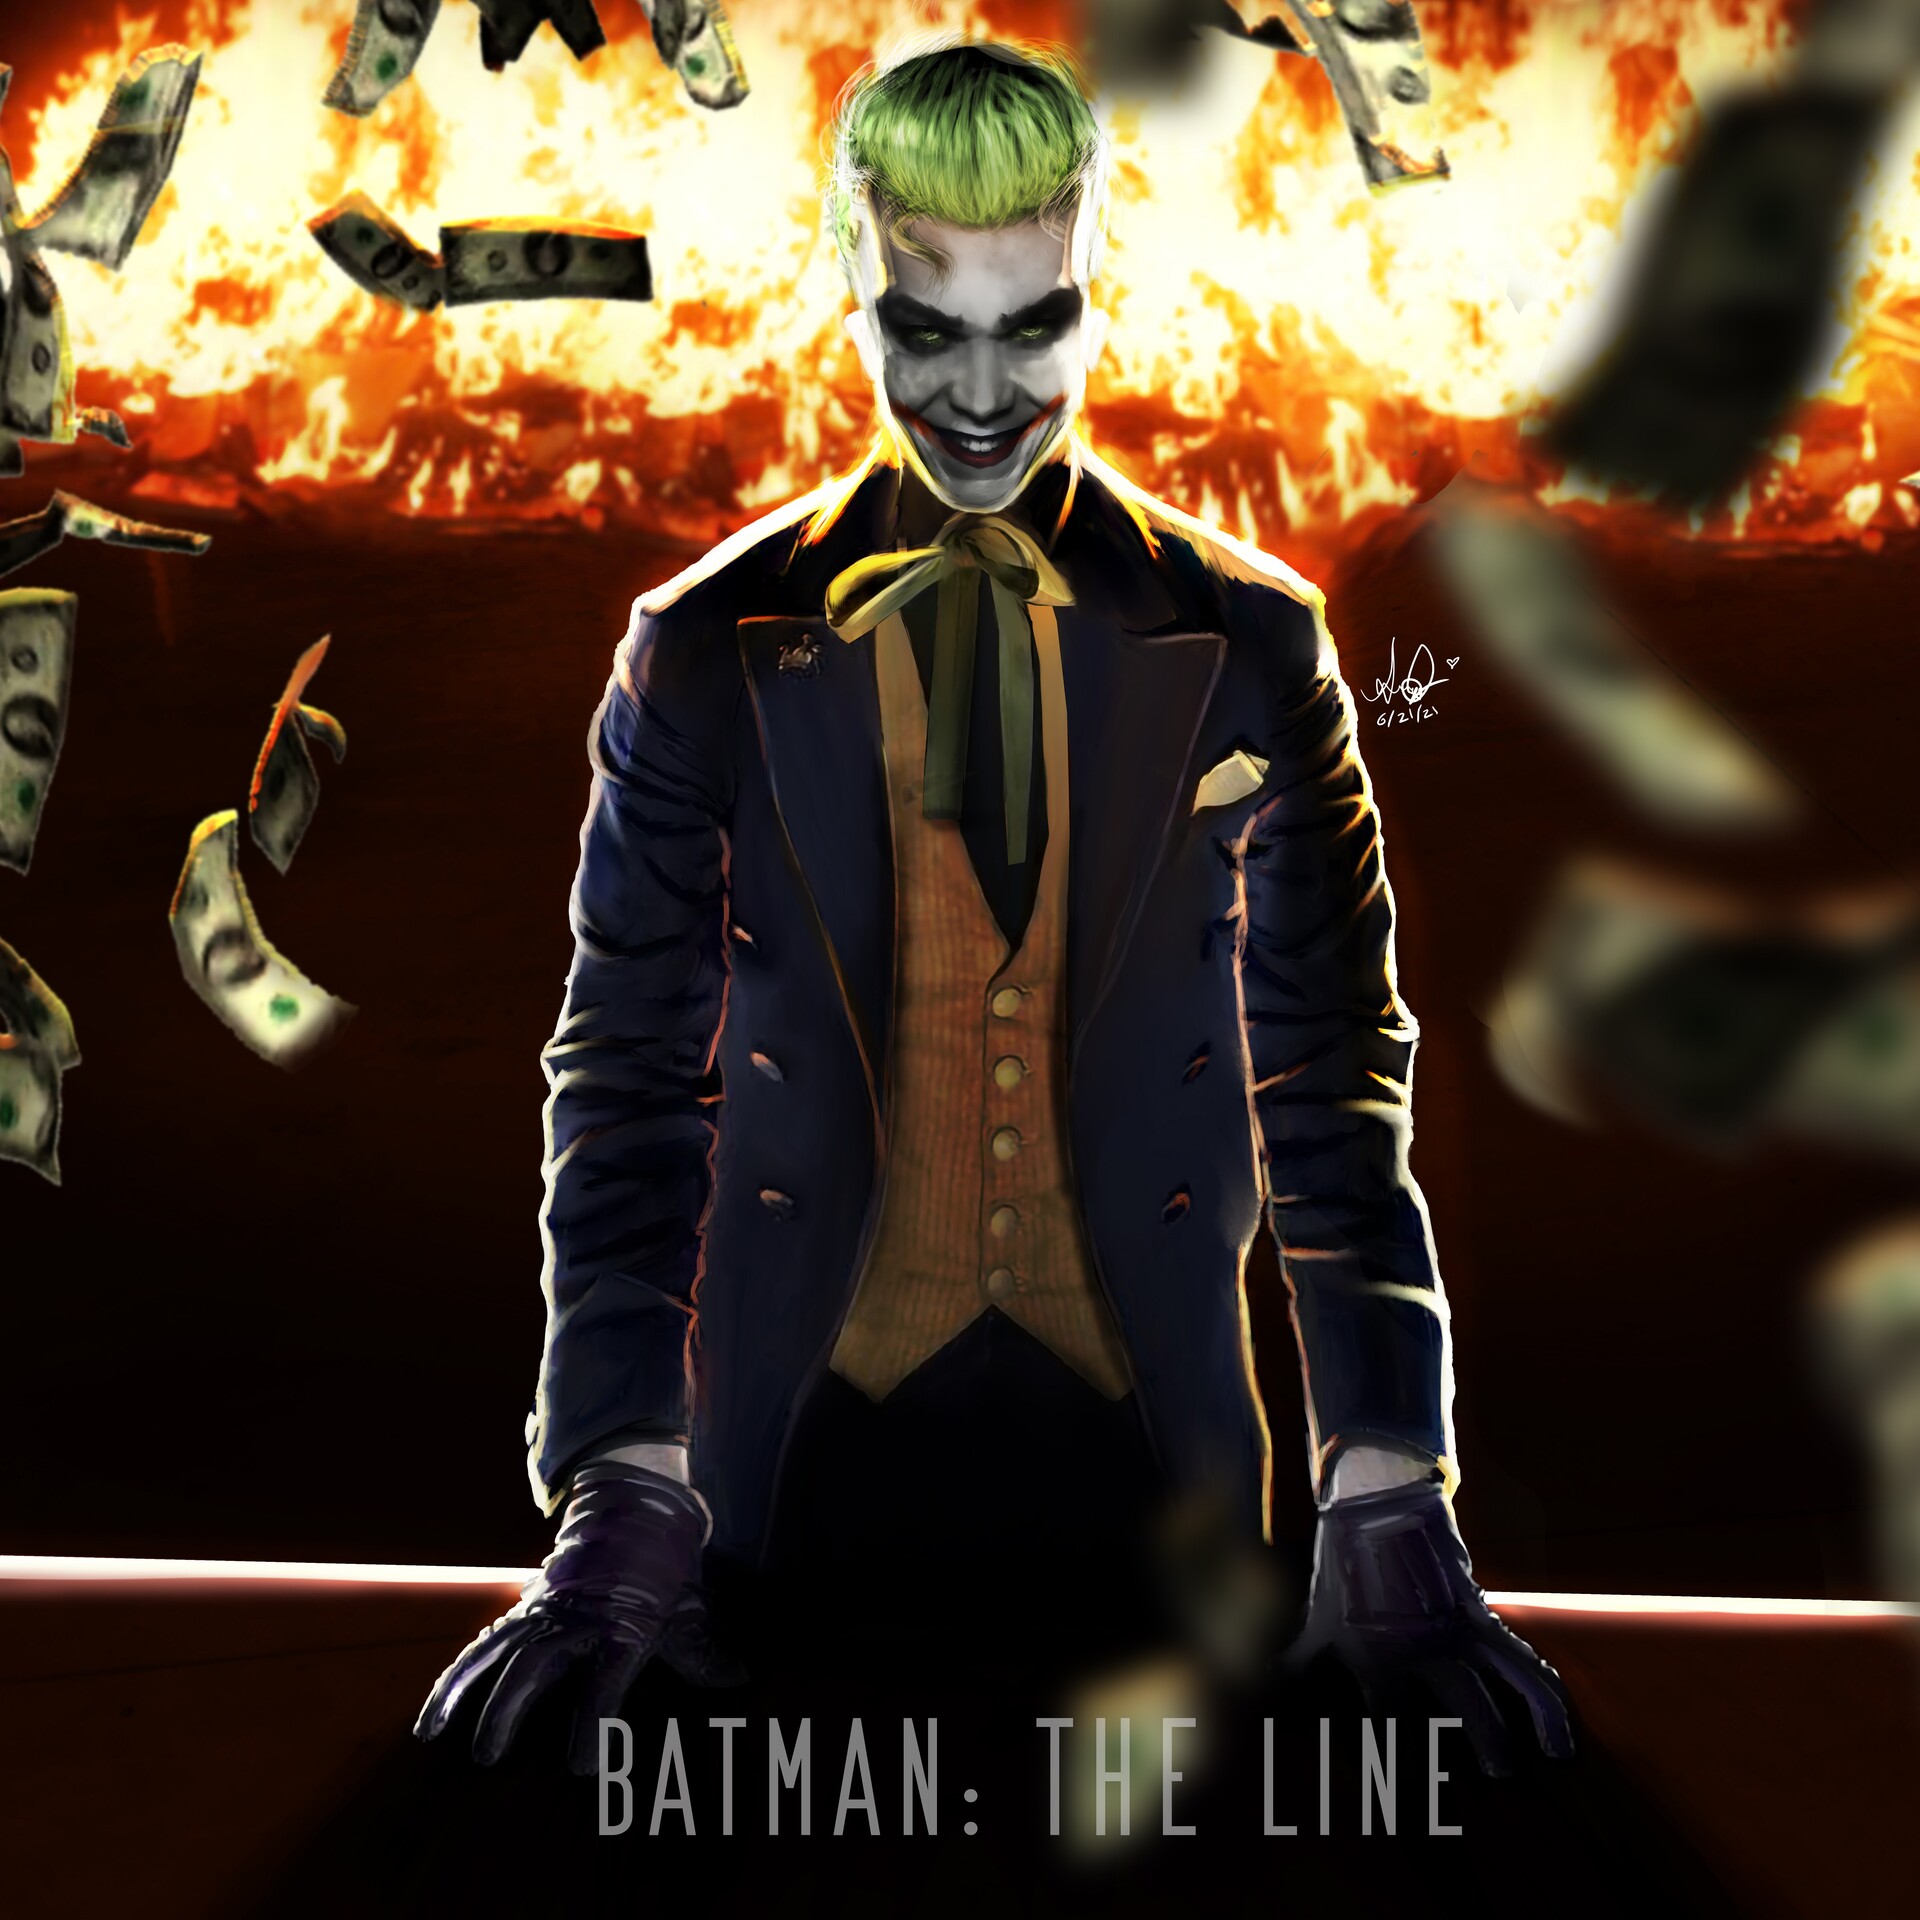 ArtStation - Joker Concept Art for Batman: The Line by Untamed Draws